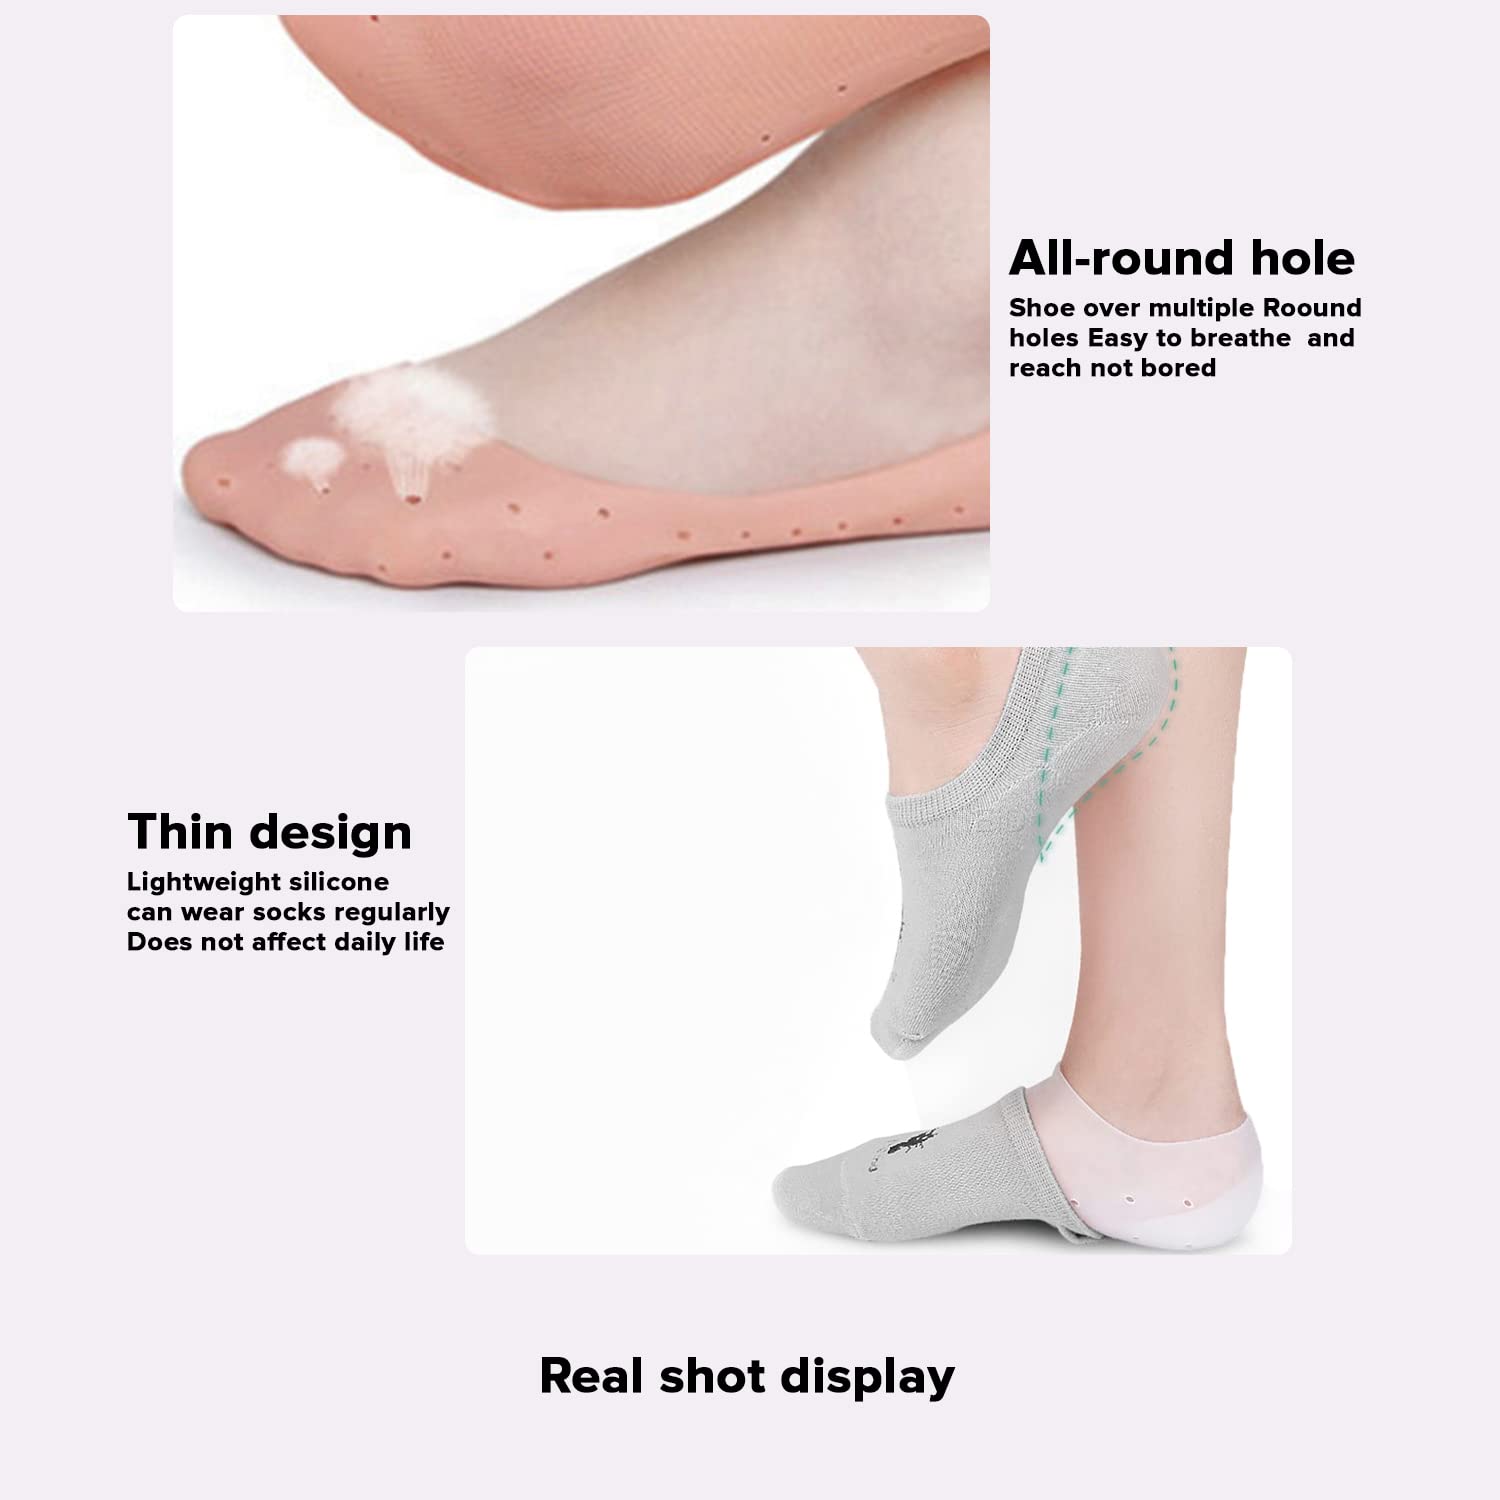 Heel Tastic Cream Cracked Feet Chapped Skin Cracked Heels Elbow Treatment  Skin | eBay